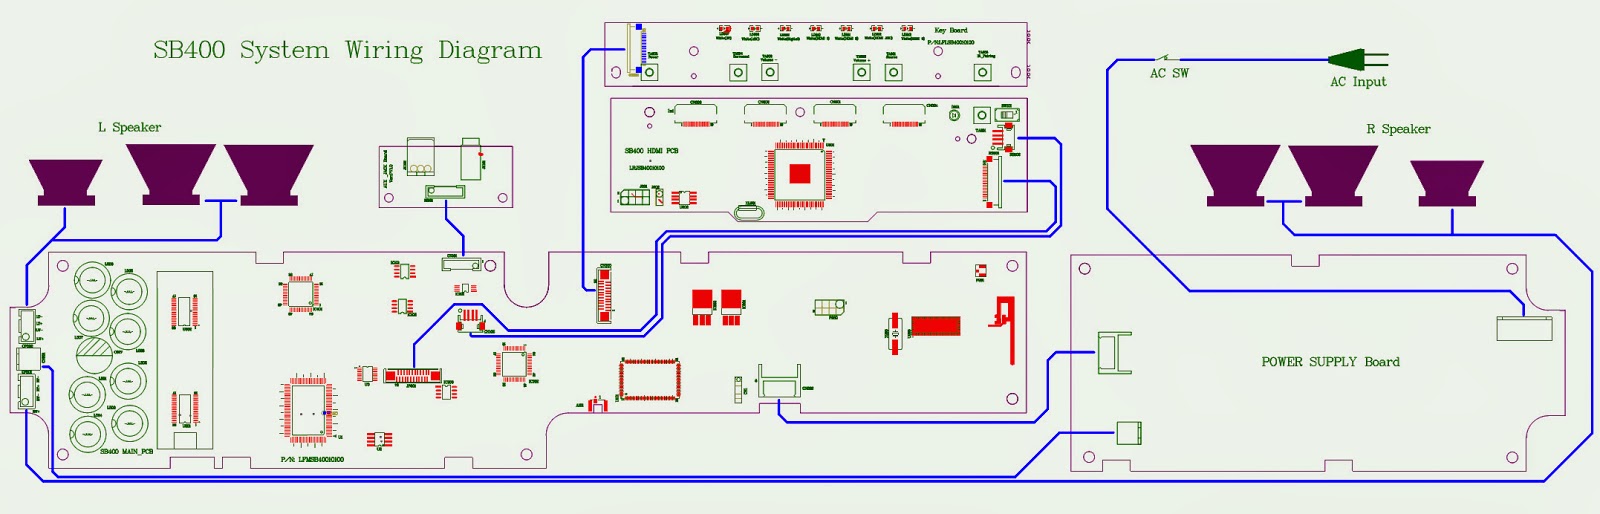 vdp sound bar wiring diagram